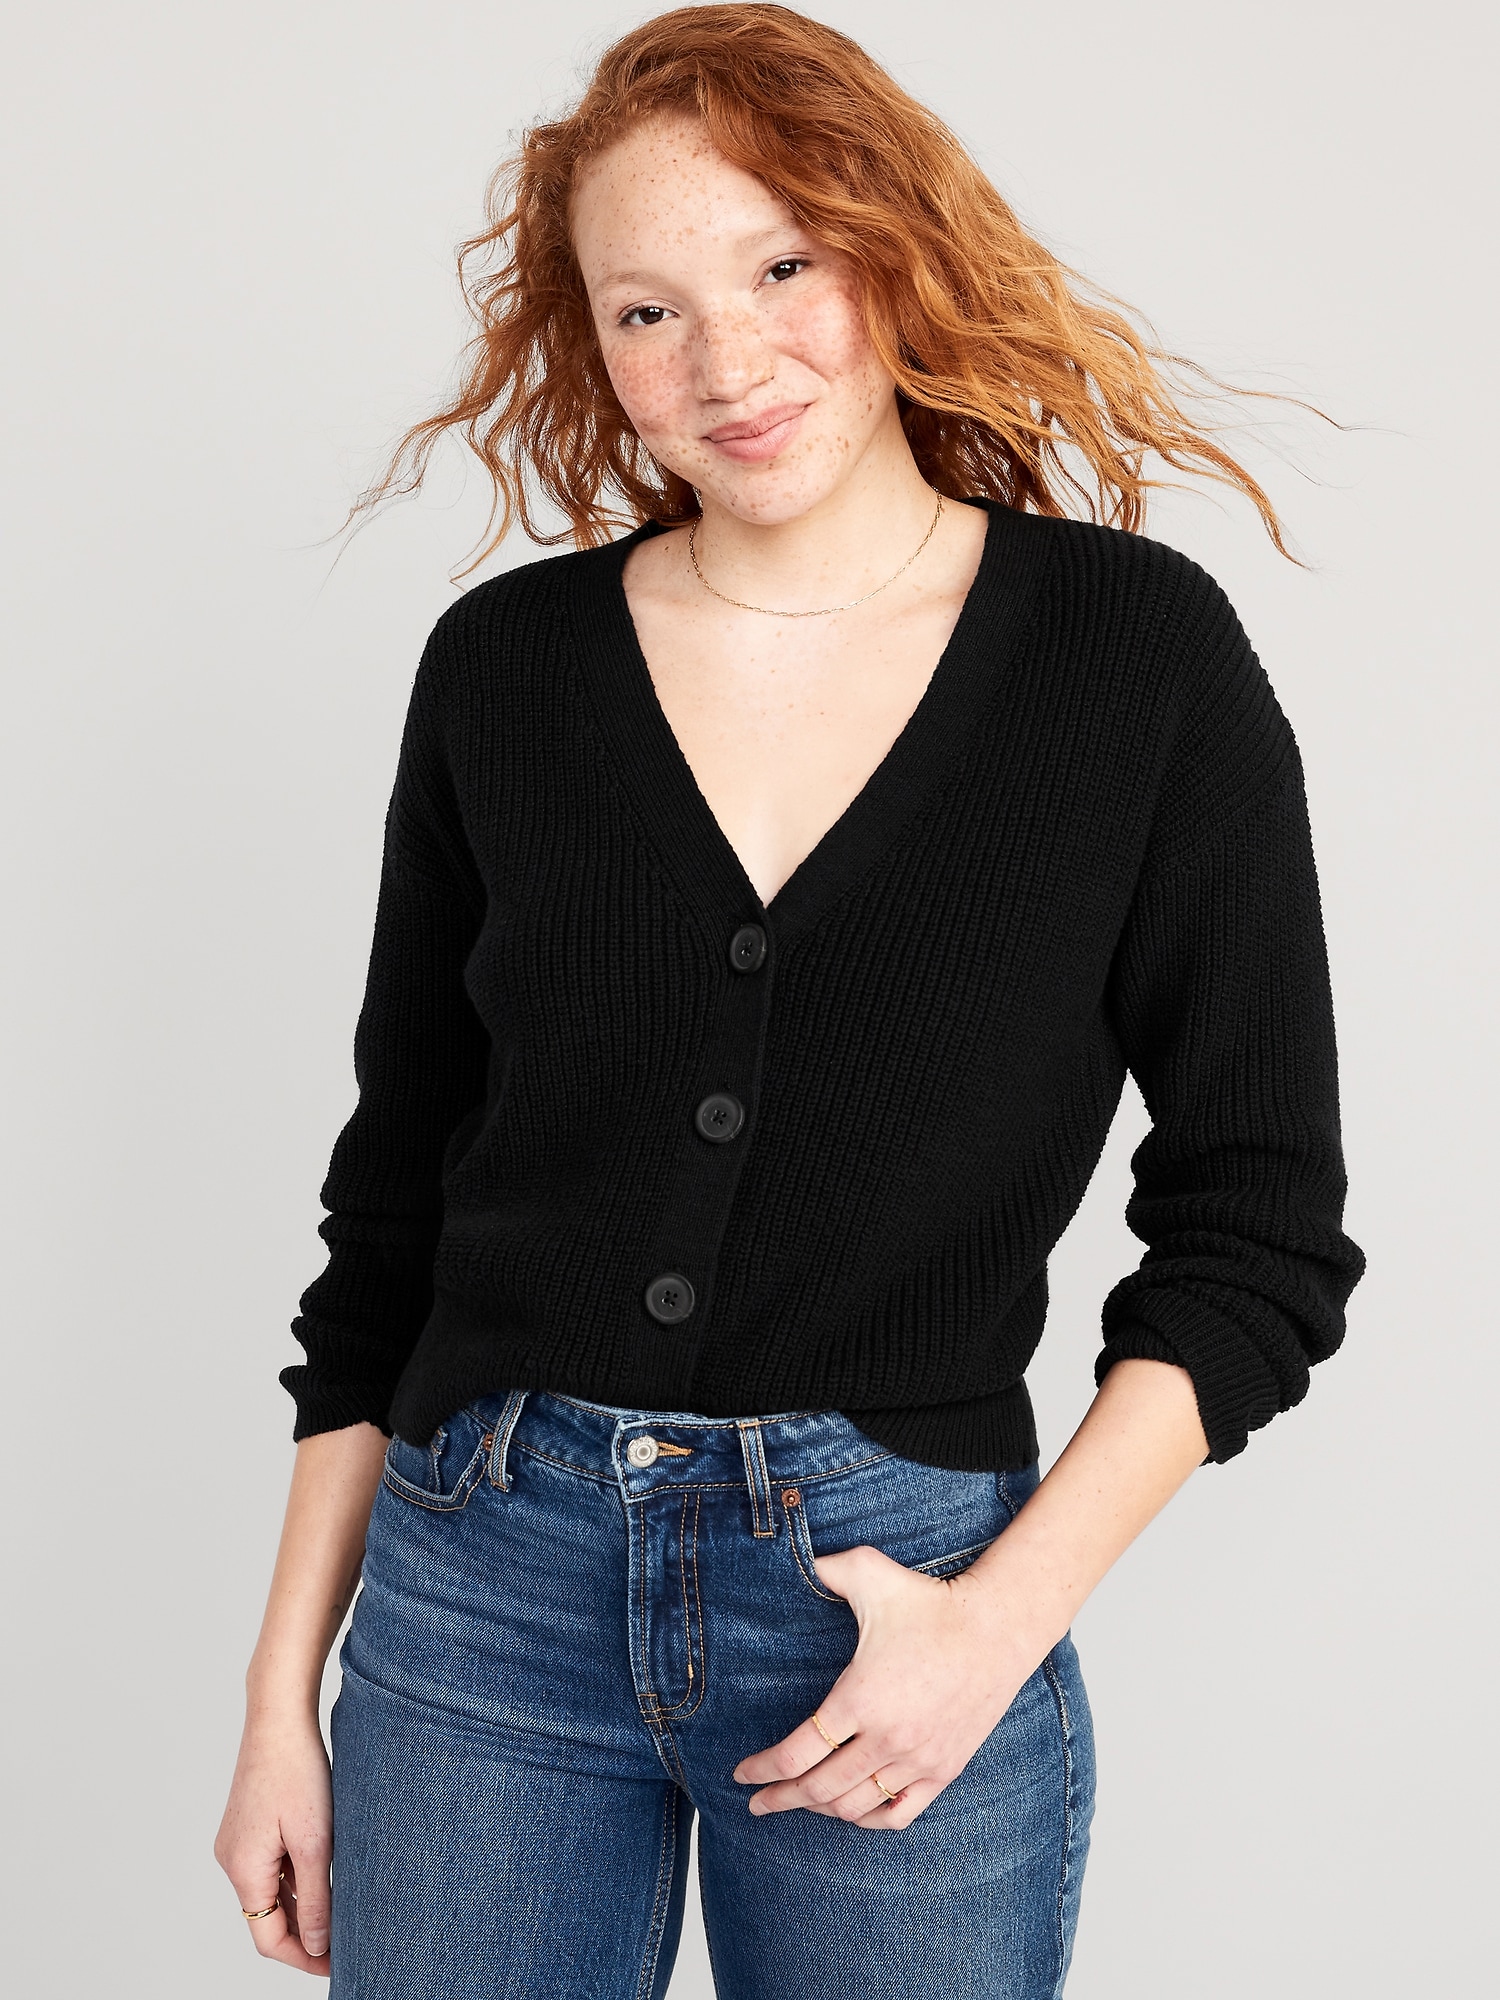 Lightweight Cotton and Linen-Blend Shaker-Stitch Cardigan Sweater